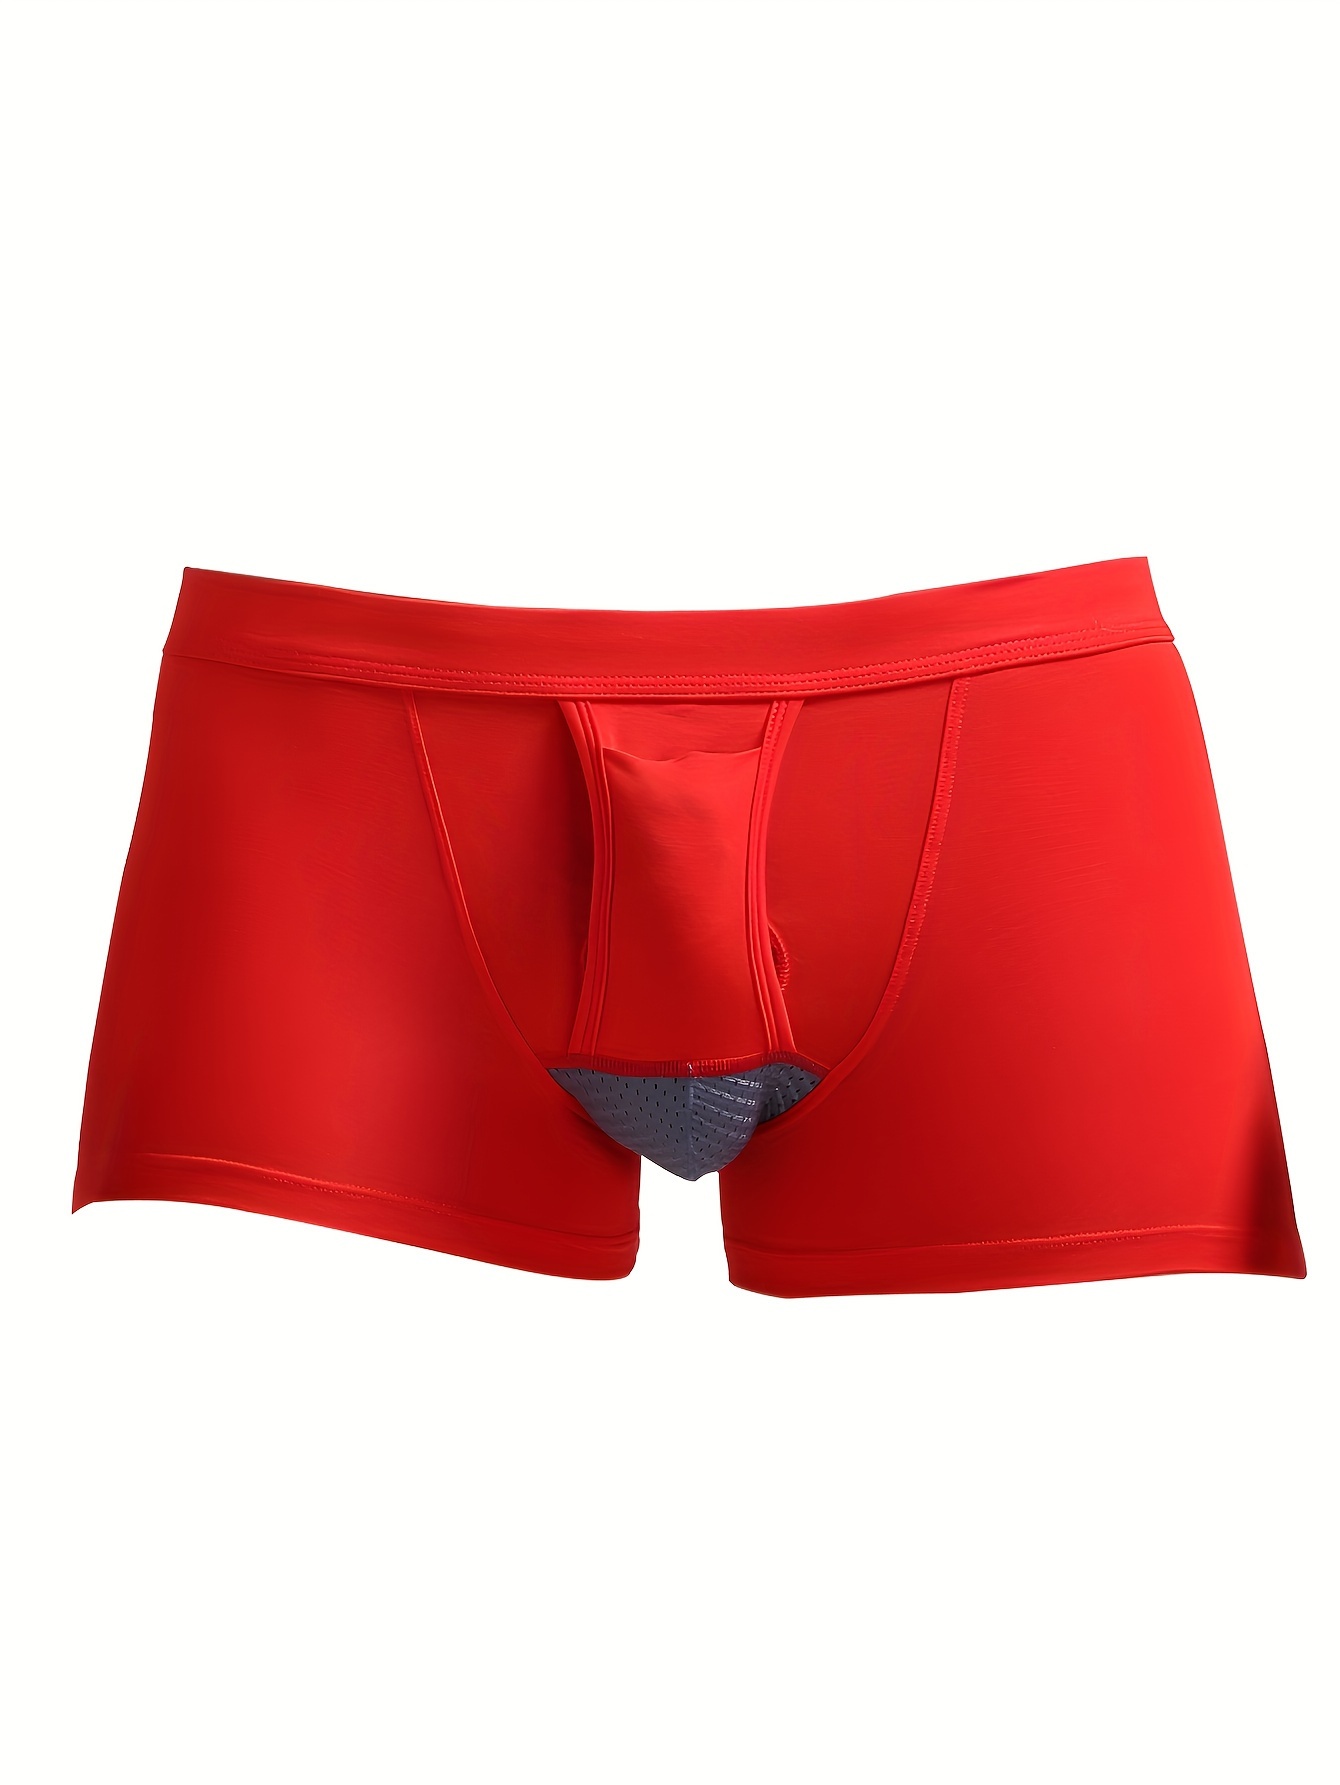 Mens Bulge Enhancing Underwear Set With Cup Sponge Applicator Pad